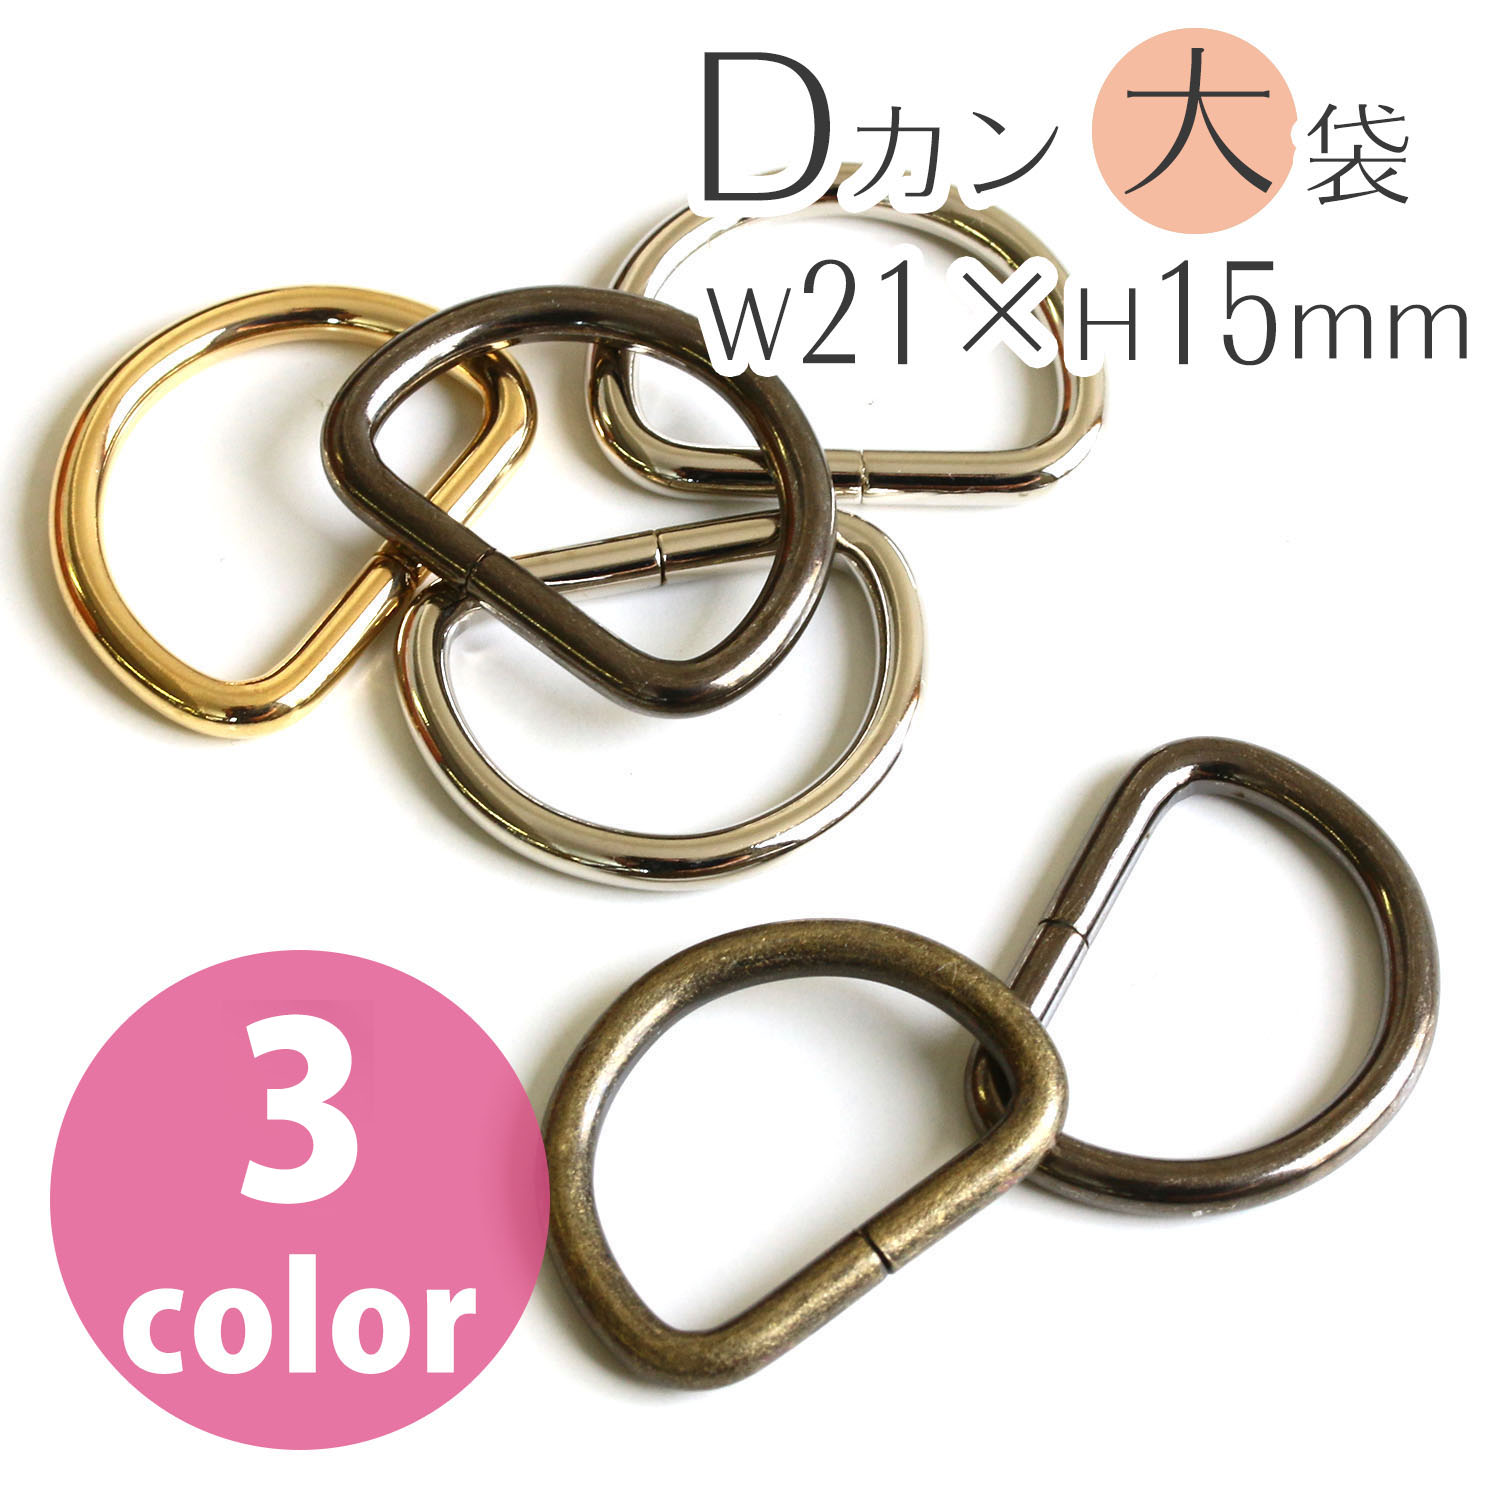 D-Ring 21 x 15mm"", diameter 3mm 120pcs (bag)